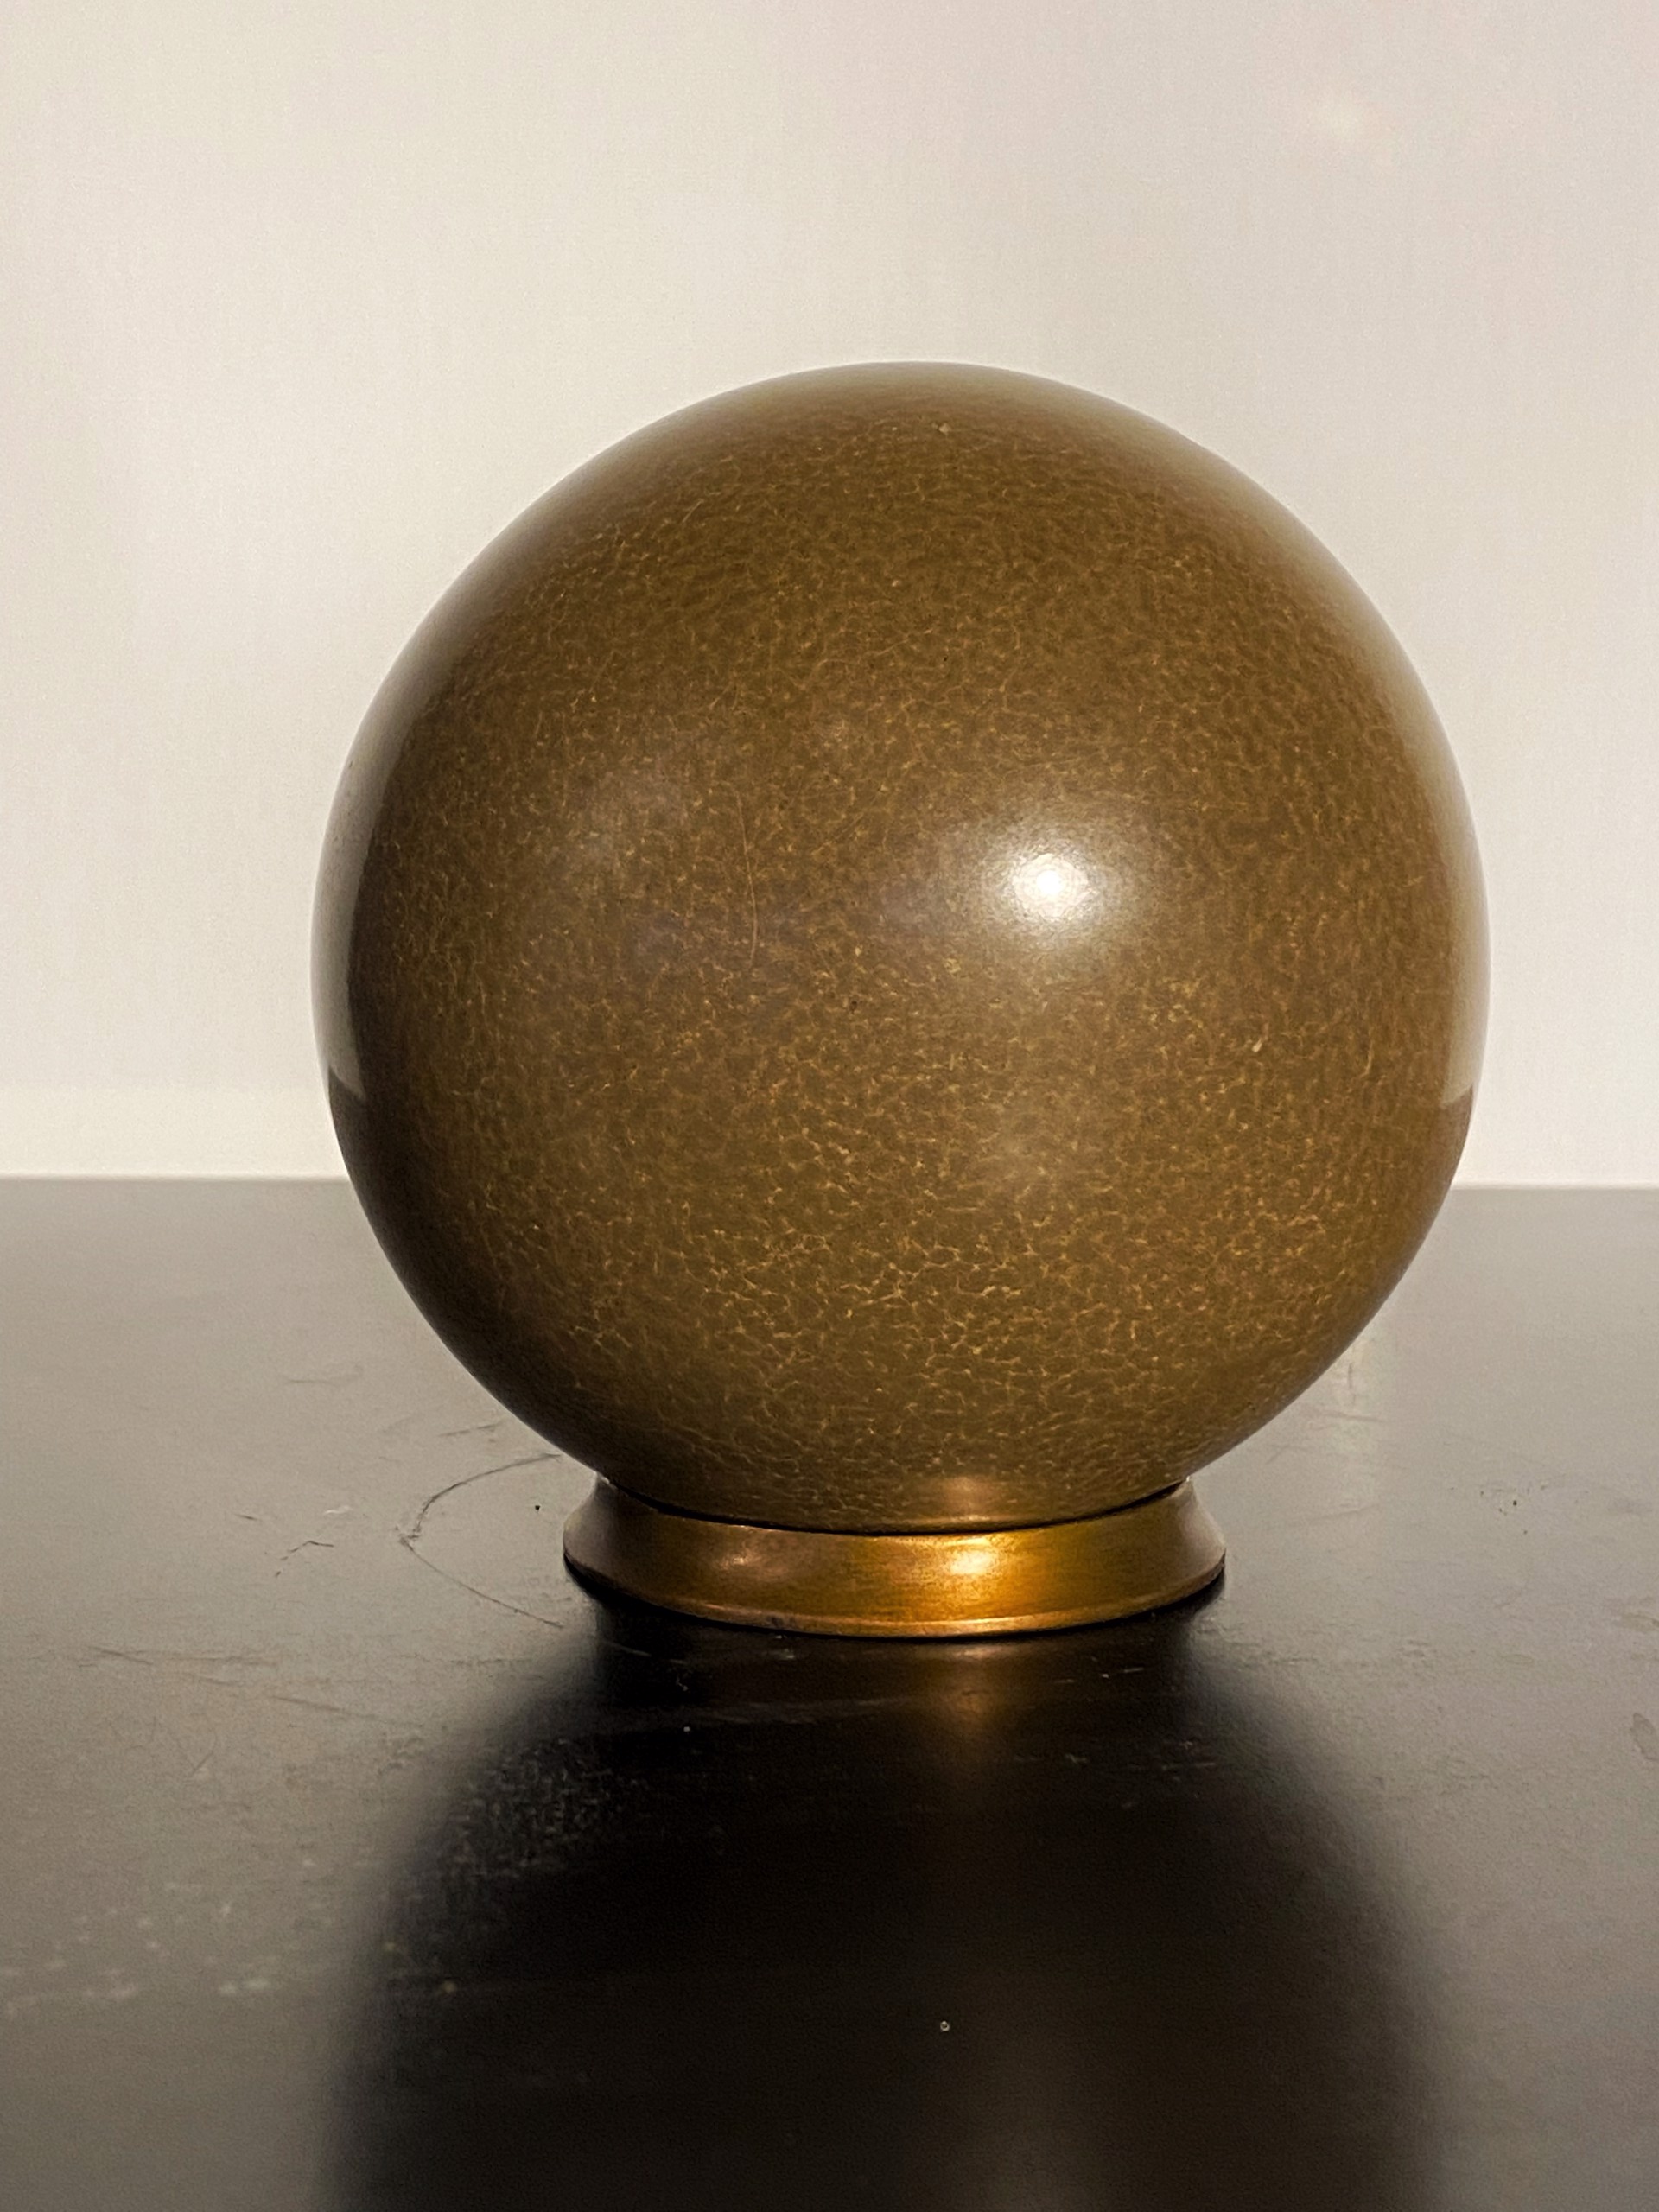 Earth Sphere #20 by Bruce Gardner